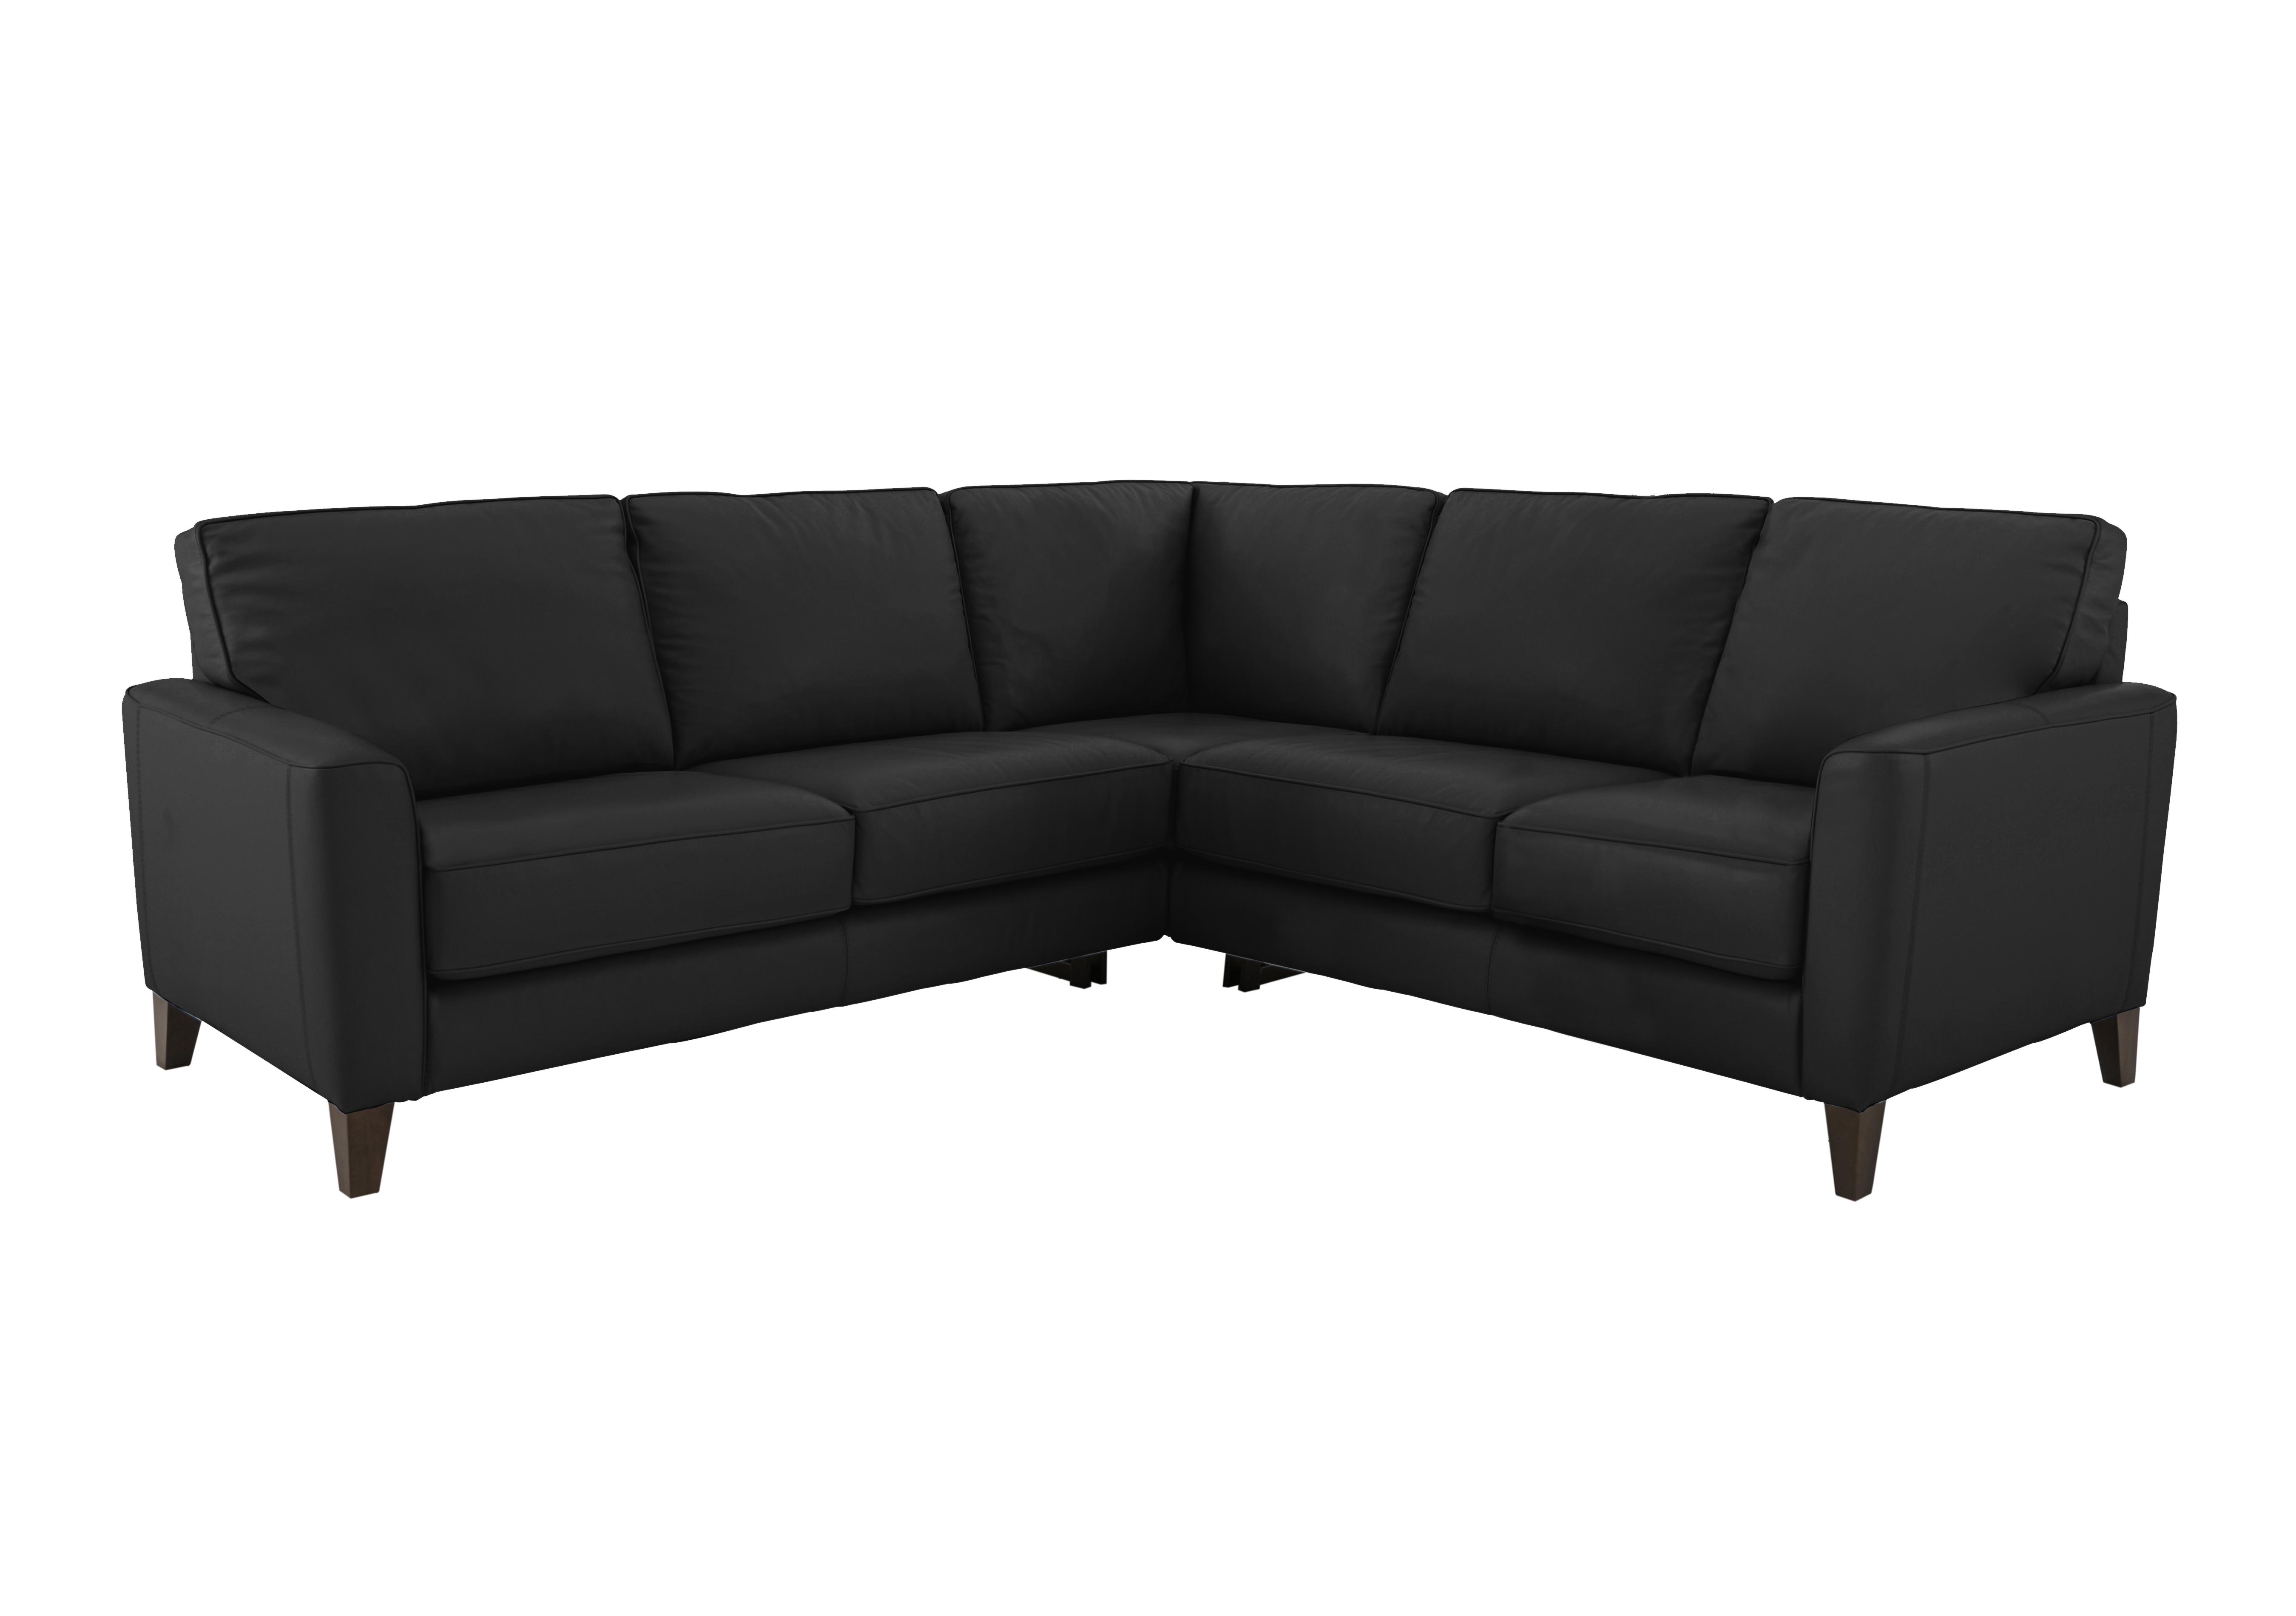 Brondby Large Leather Corner Sofa in Bv-3500 Classic Black on Furniture Village